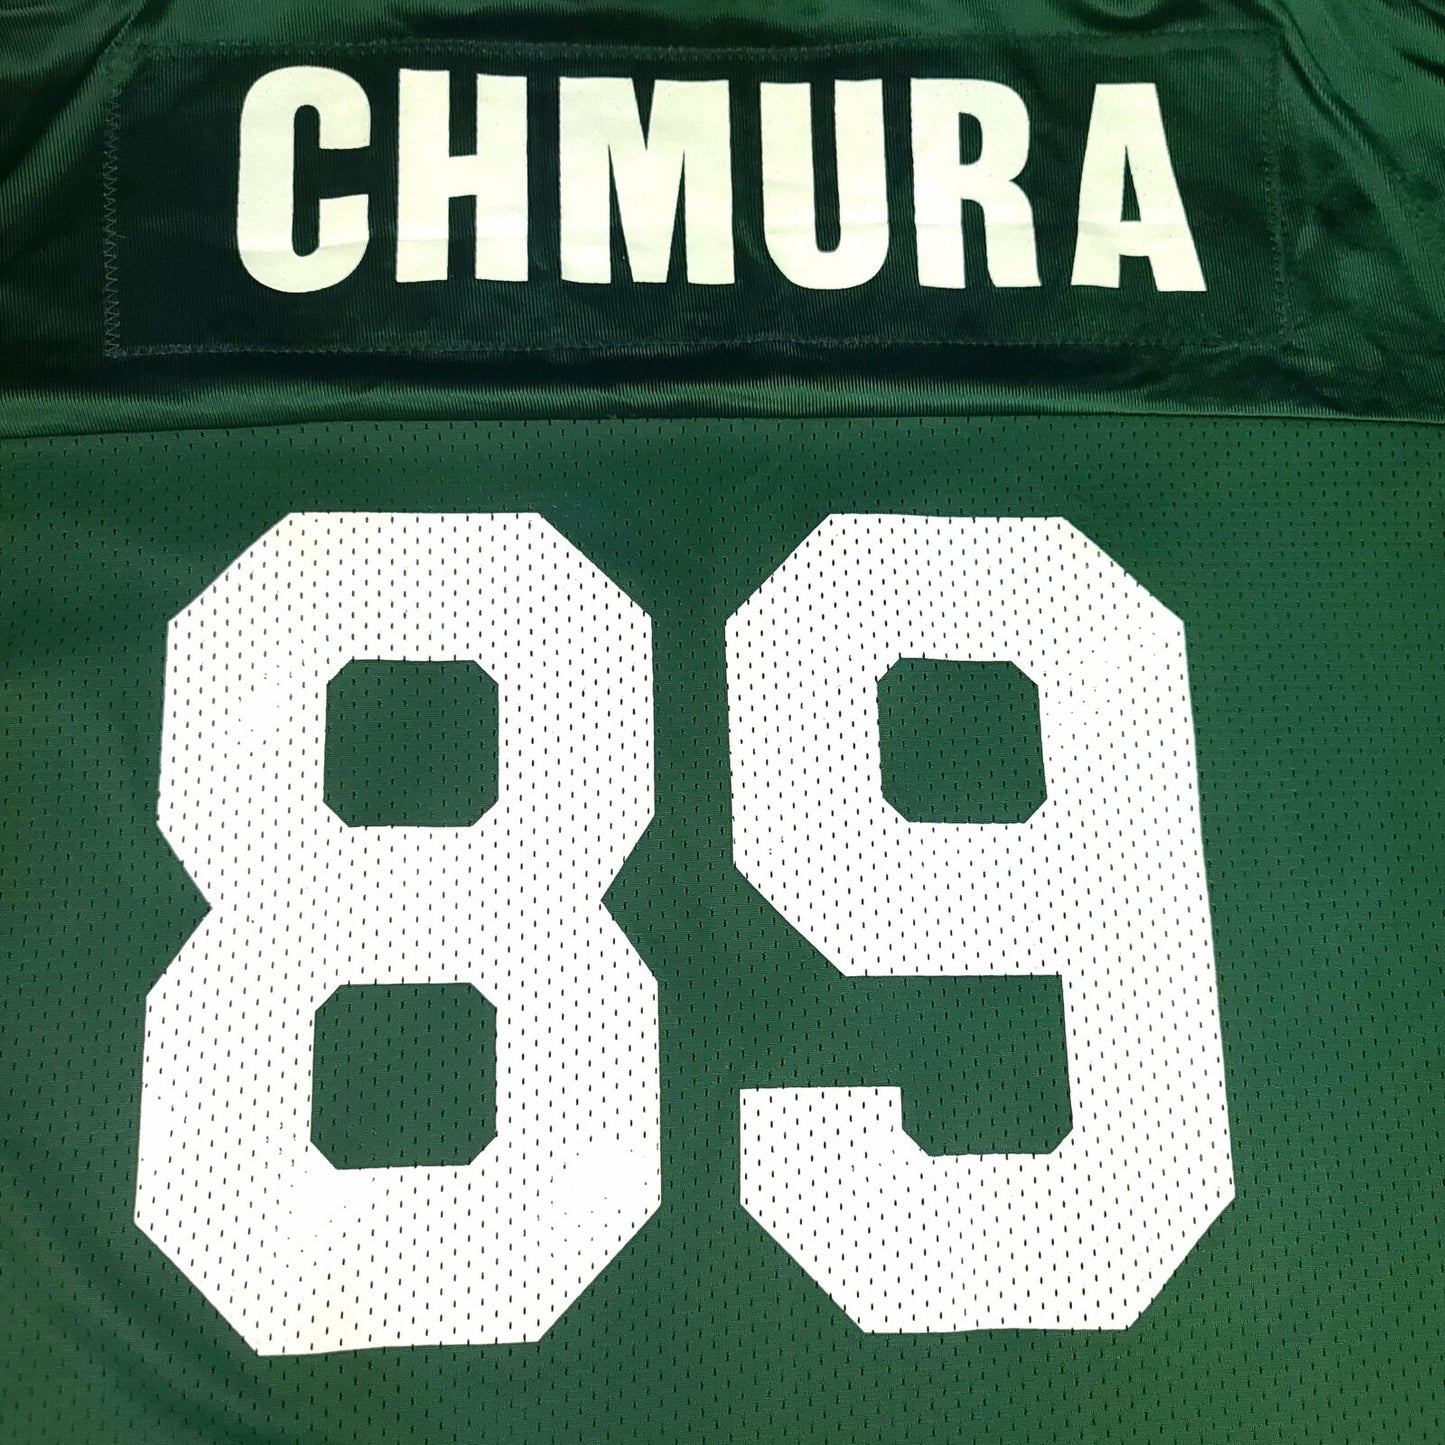 Mark Chmura #89 Green Bay Packers Champion Jersey